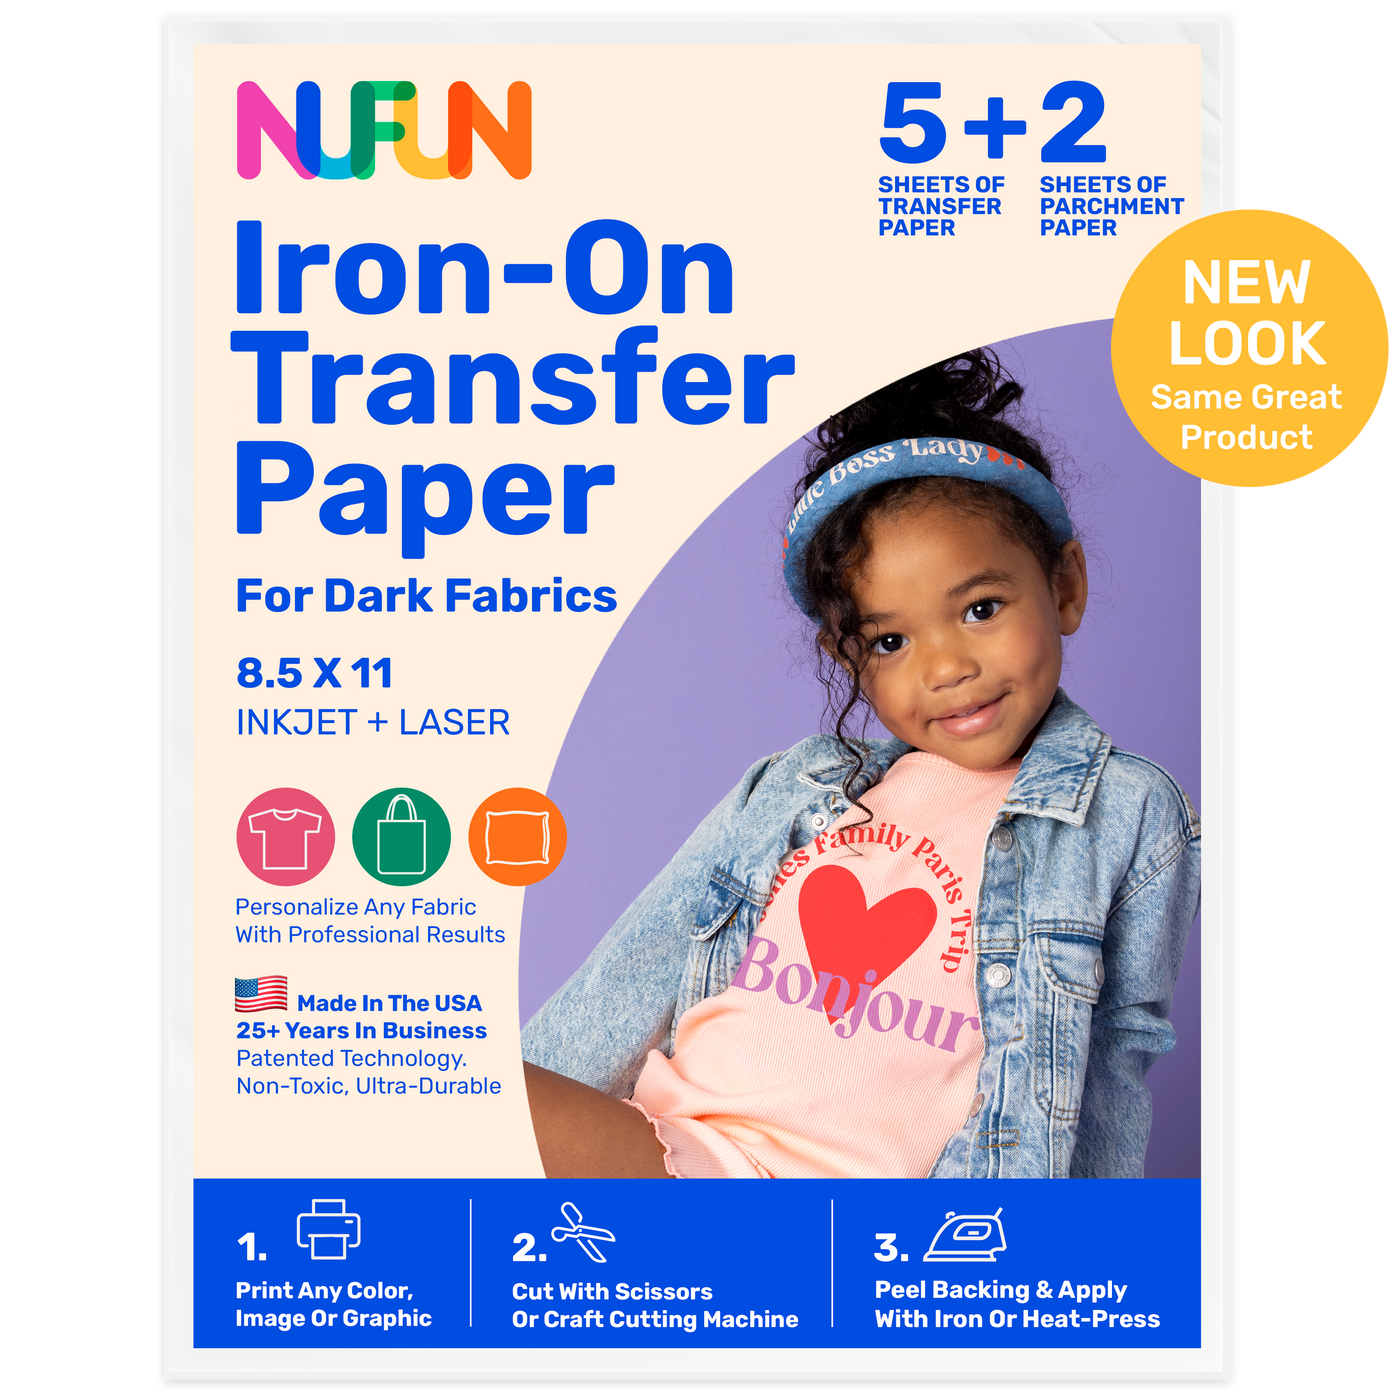 Iron-on transfer paper for dark fabrics